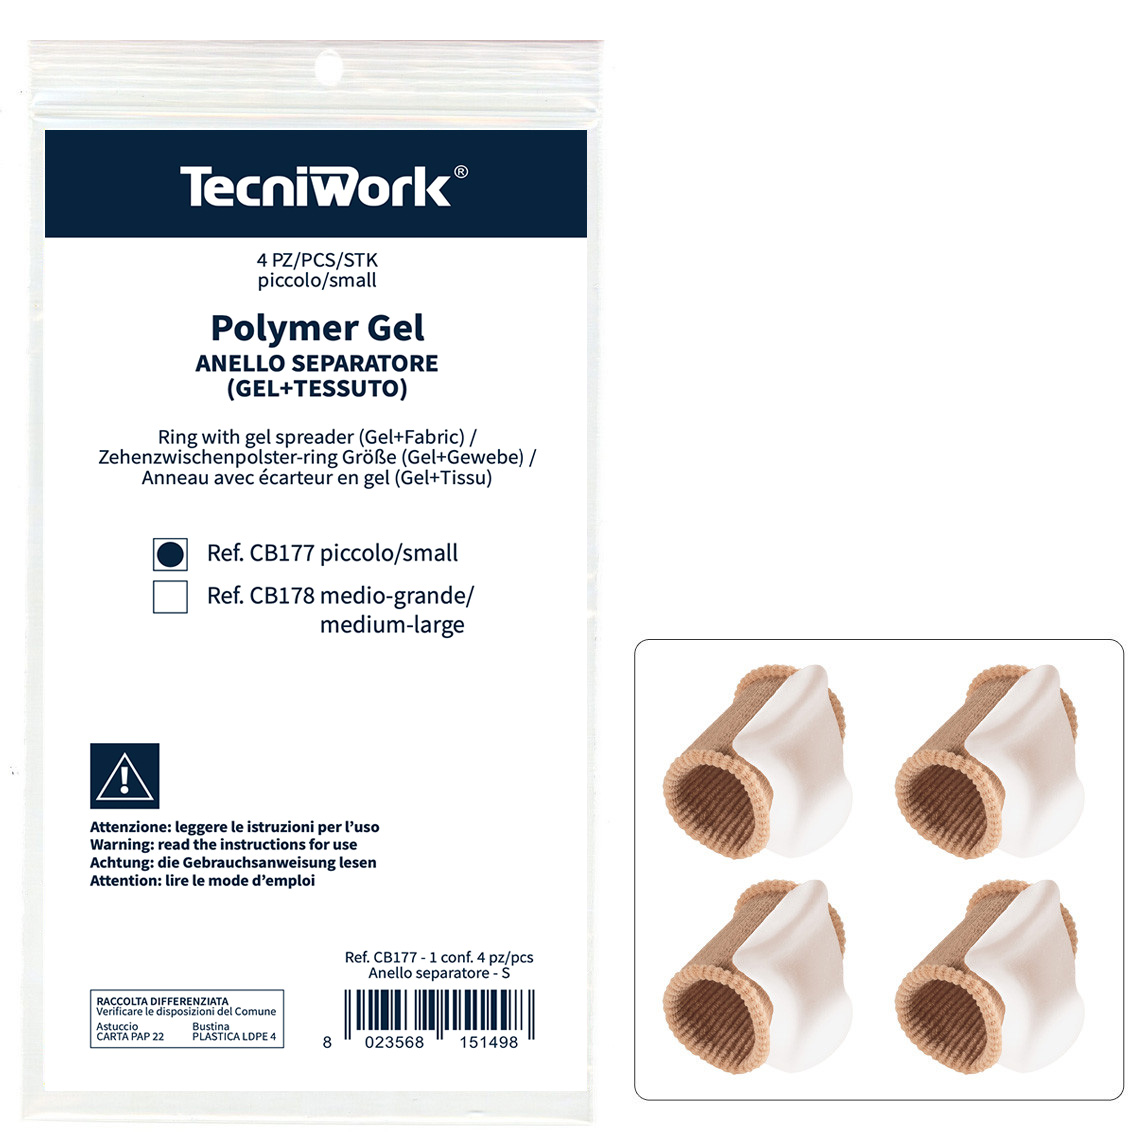 Anneau et séparateur d'orteils en Tecniwork Polymer Gel et tissu